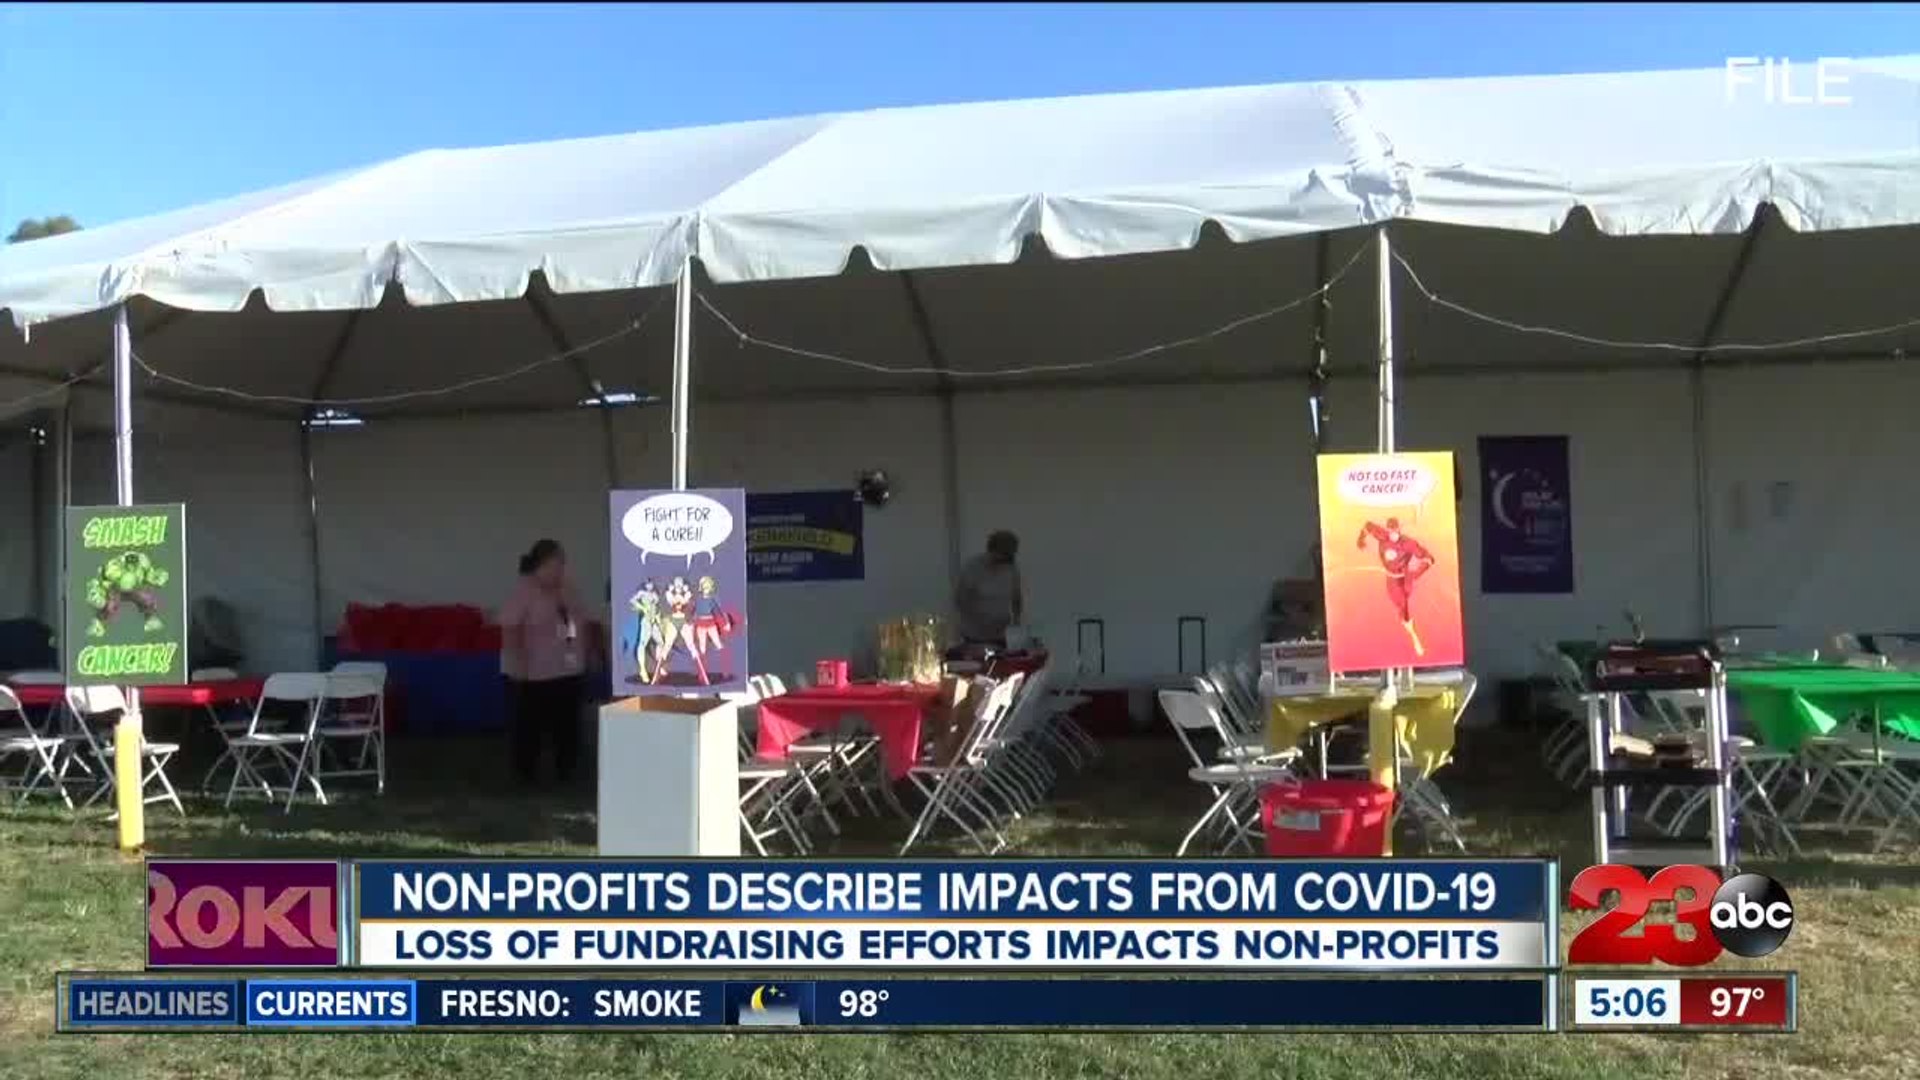 Non-profits describe impact of COVID-19 on fundraising